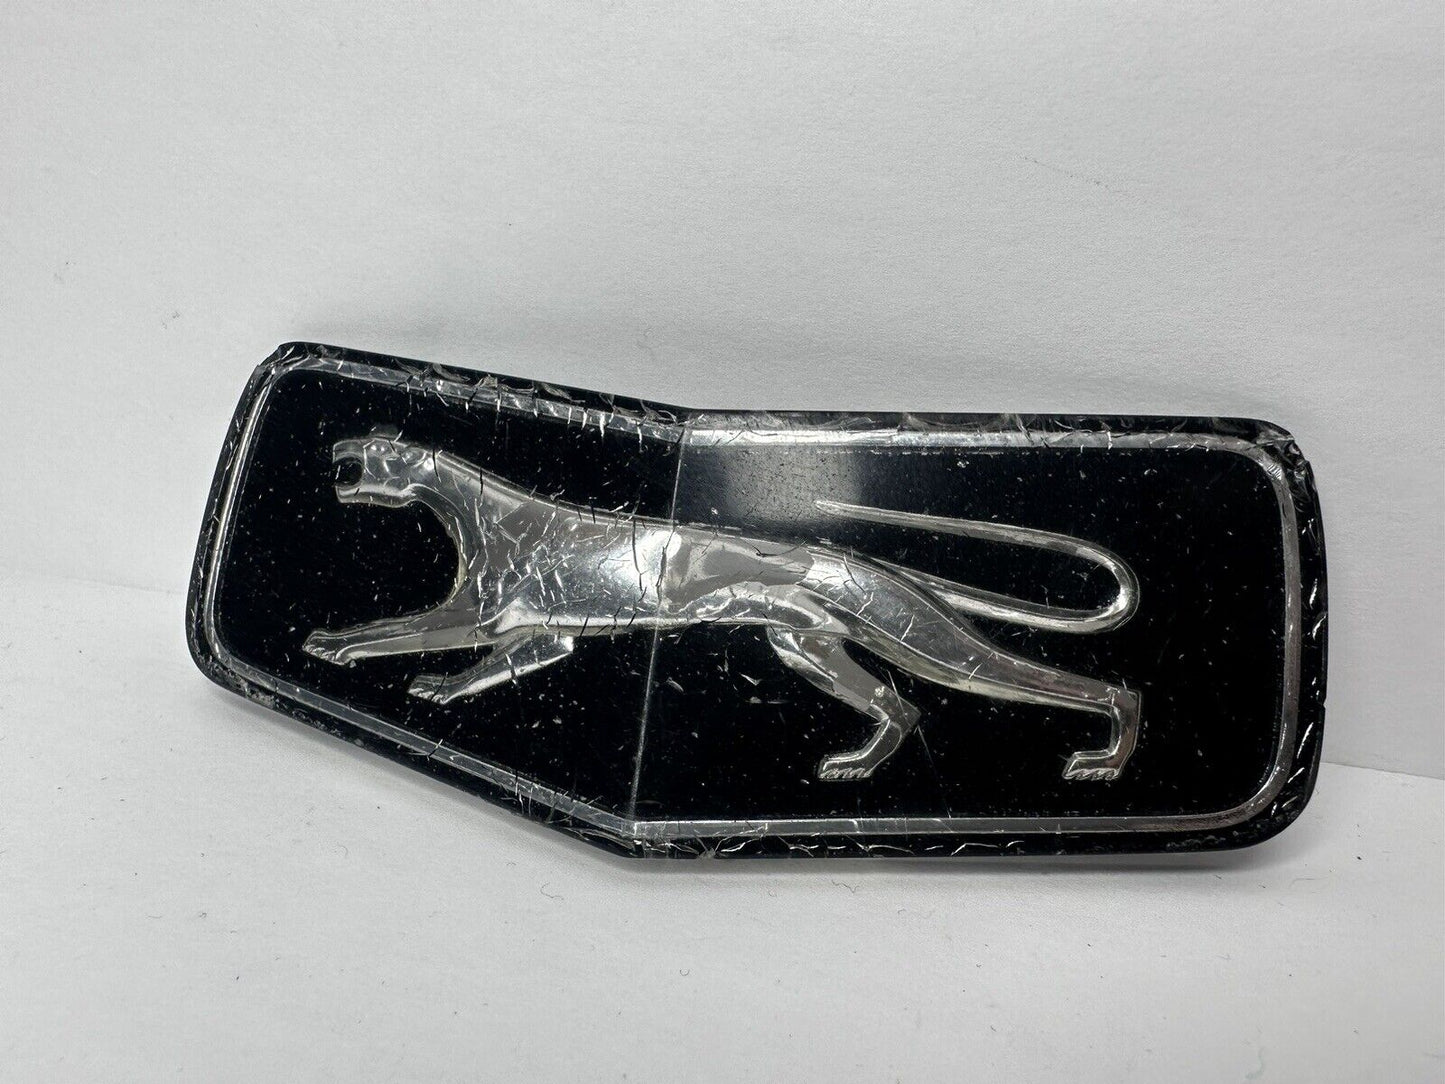 Authentic 1970s Mercury Cougar Hood Emblem - Rare Vintage Walking Cat Badge for Classic Car Restoration - TreasuTiques